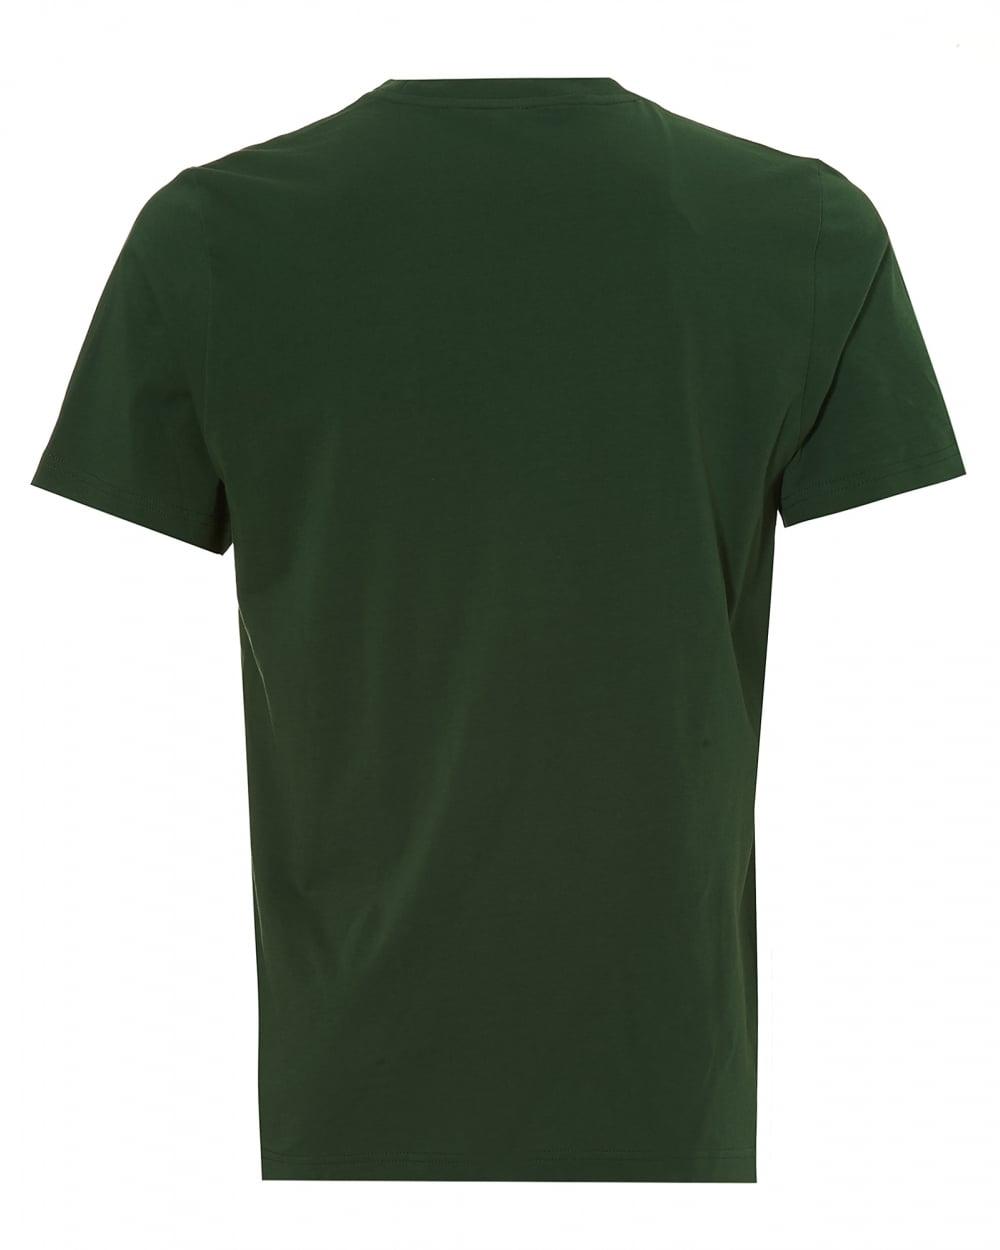 Green Y Logo - Y-3 Mens Classic Logo T-Shirt, Short Sleeved Field Green Tee